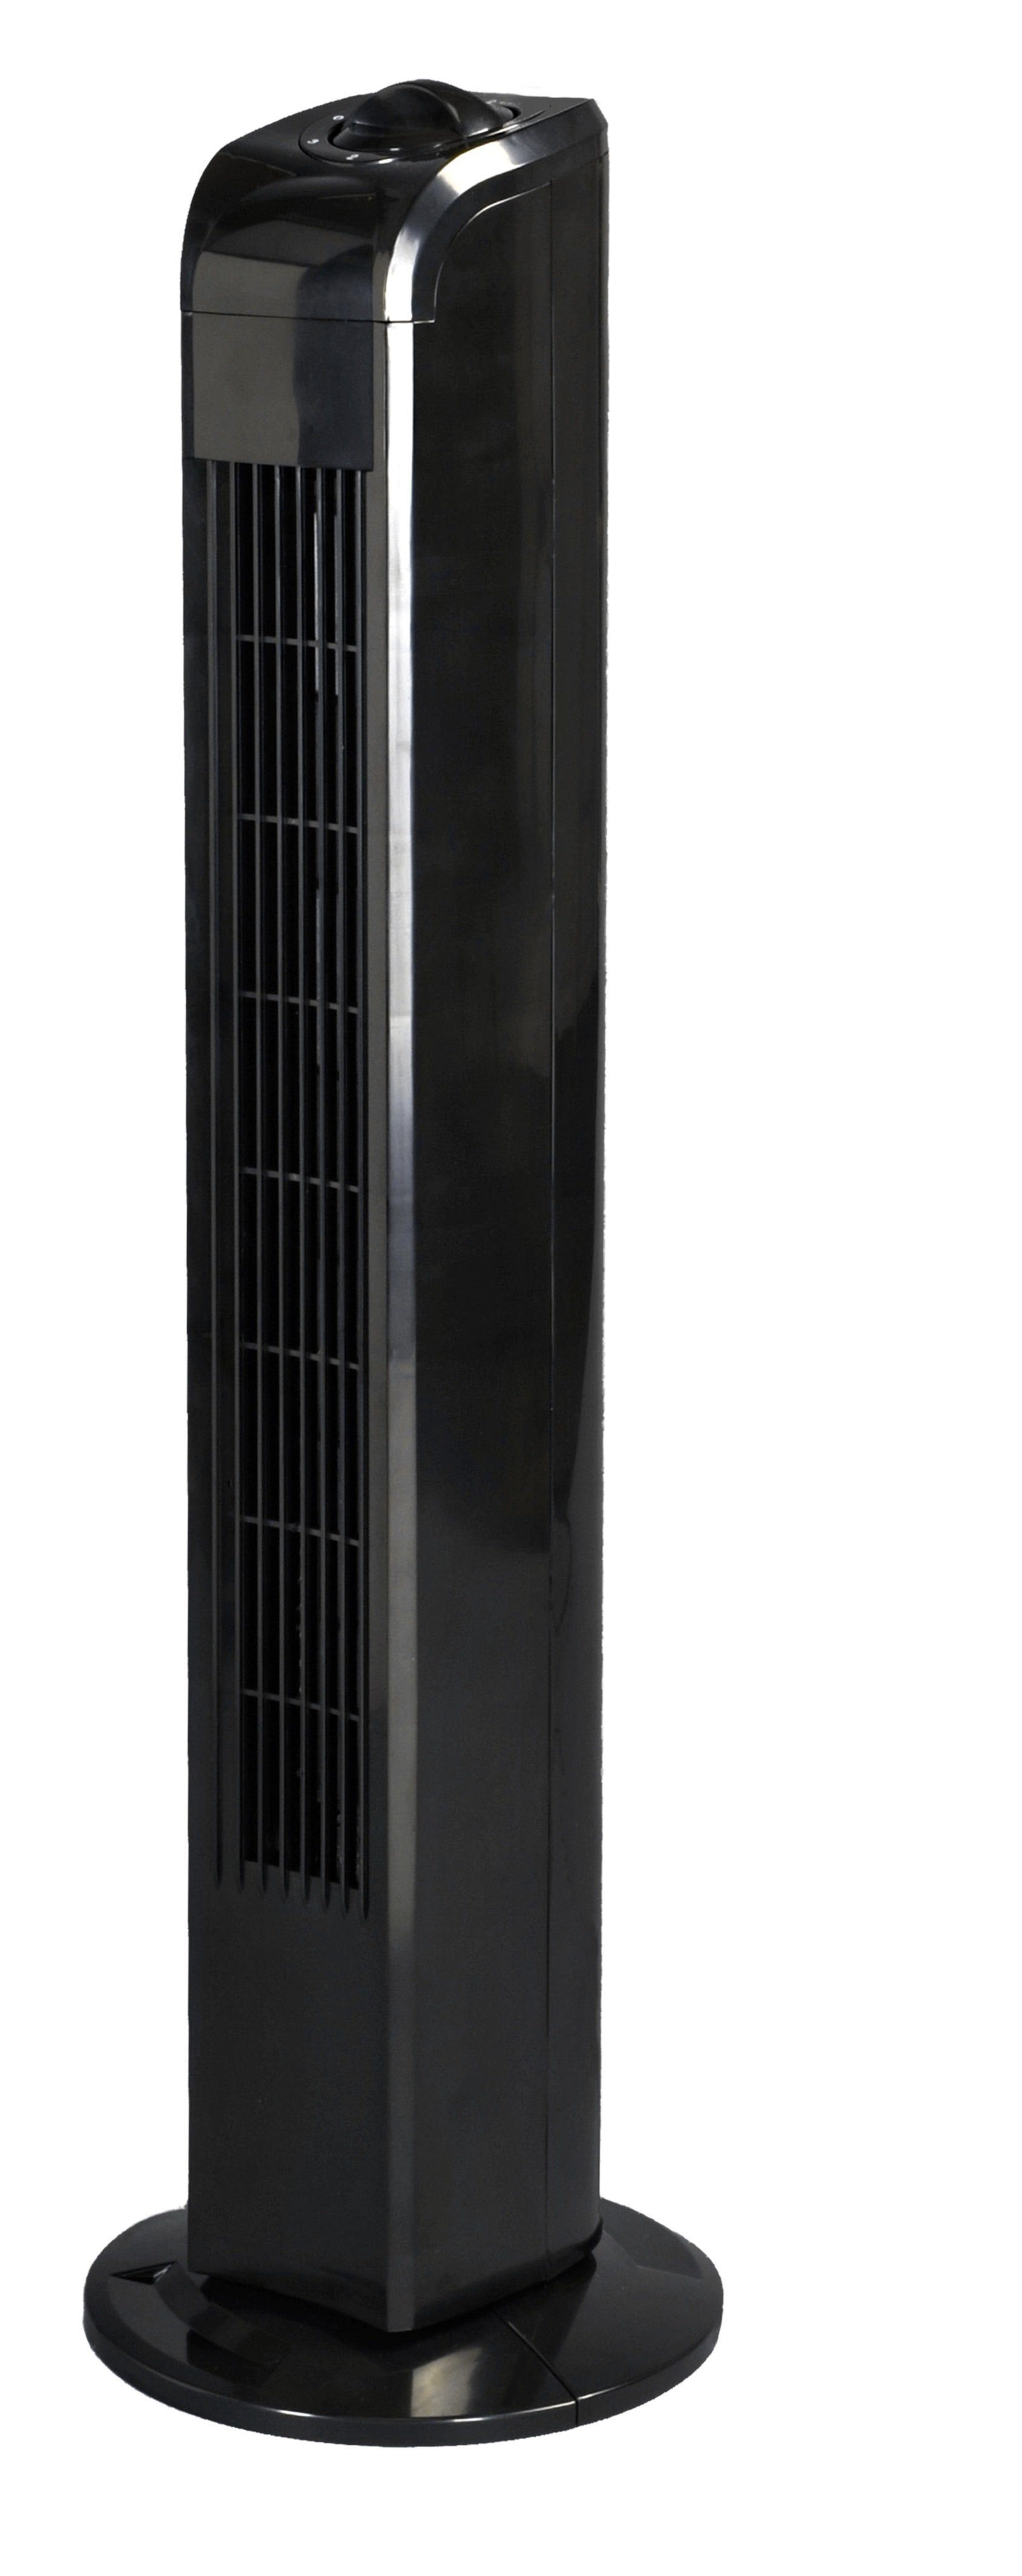 JUNG Turmventilator TVE22 Ventilator 76cm Turmventilator Вентилятори, 75° Oszillation, Standventilator, 50W Turmlüfter, bis 40m², leise, Вентилятори